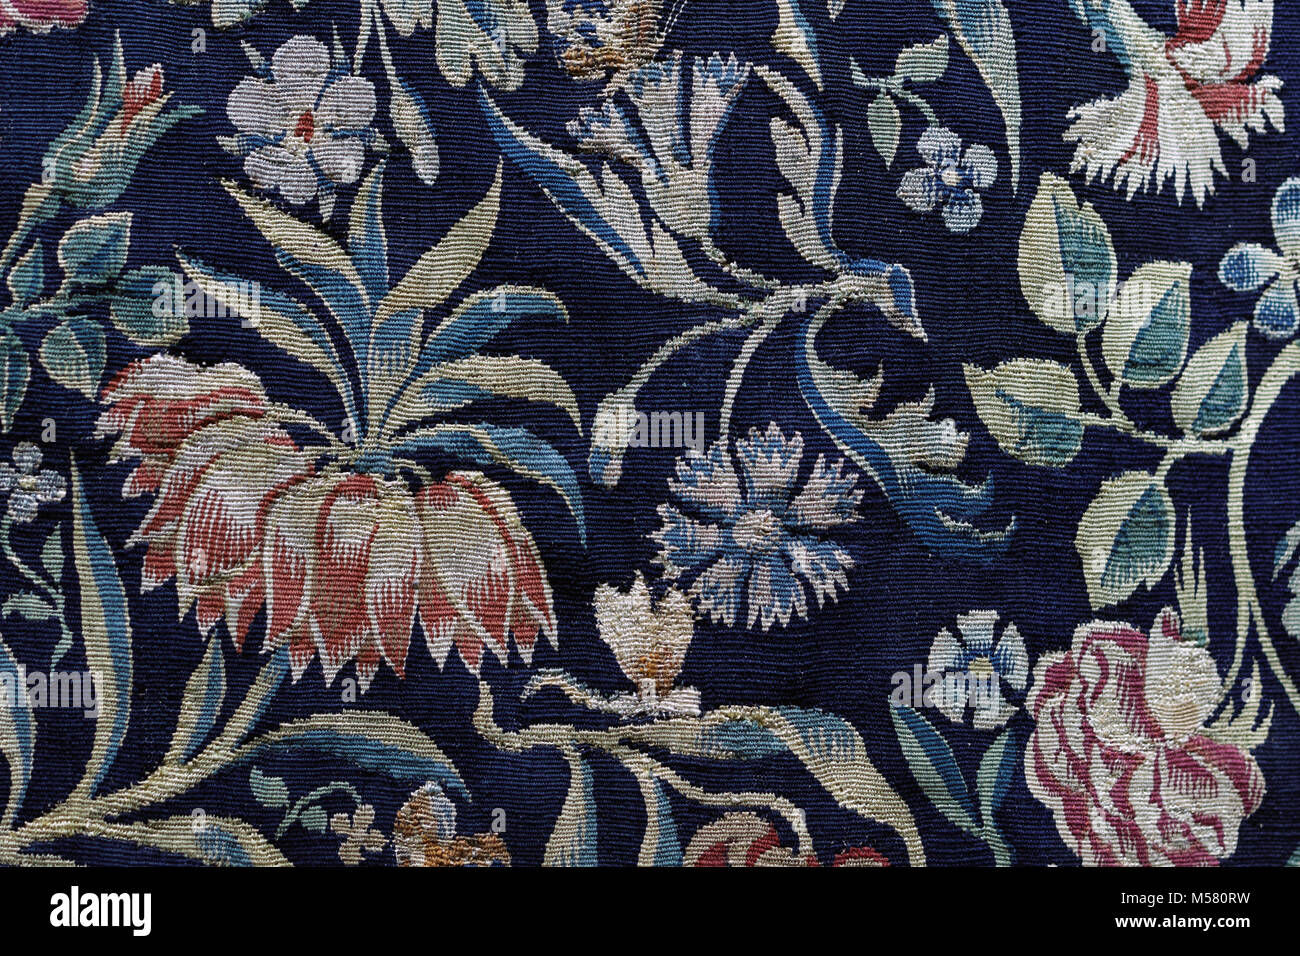 https://c8.alamy.com/comp/M580RW/old-floral-tapestry-background-in-dark-blue-M580RW.jpg